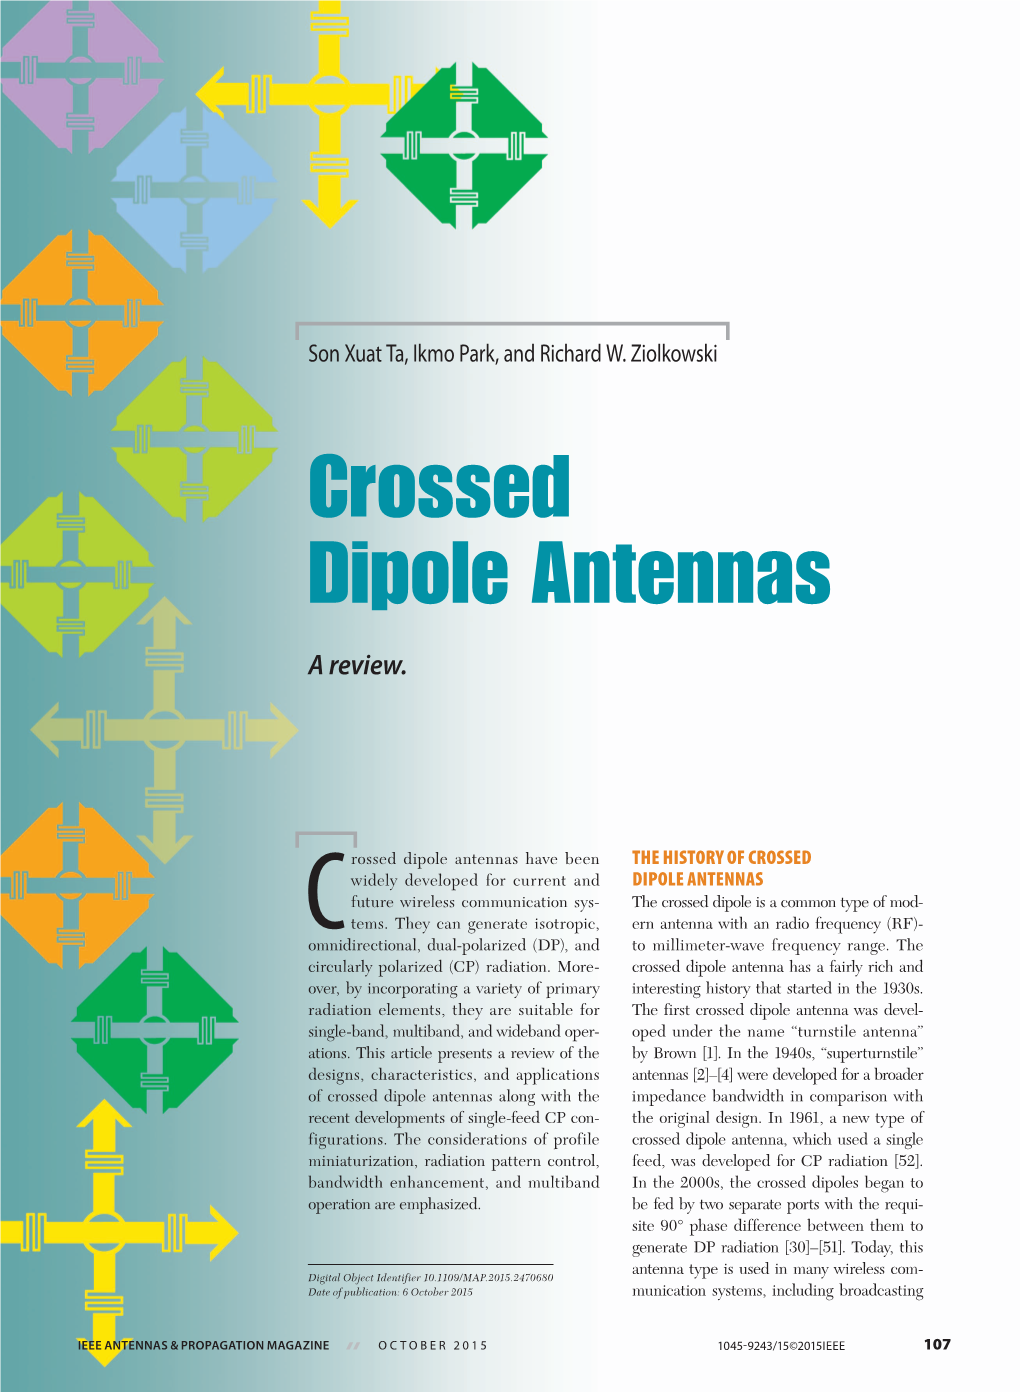 Crossed Dipole Antennas